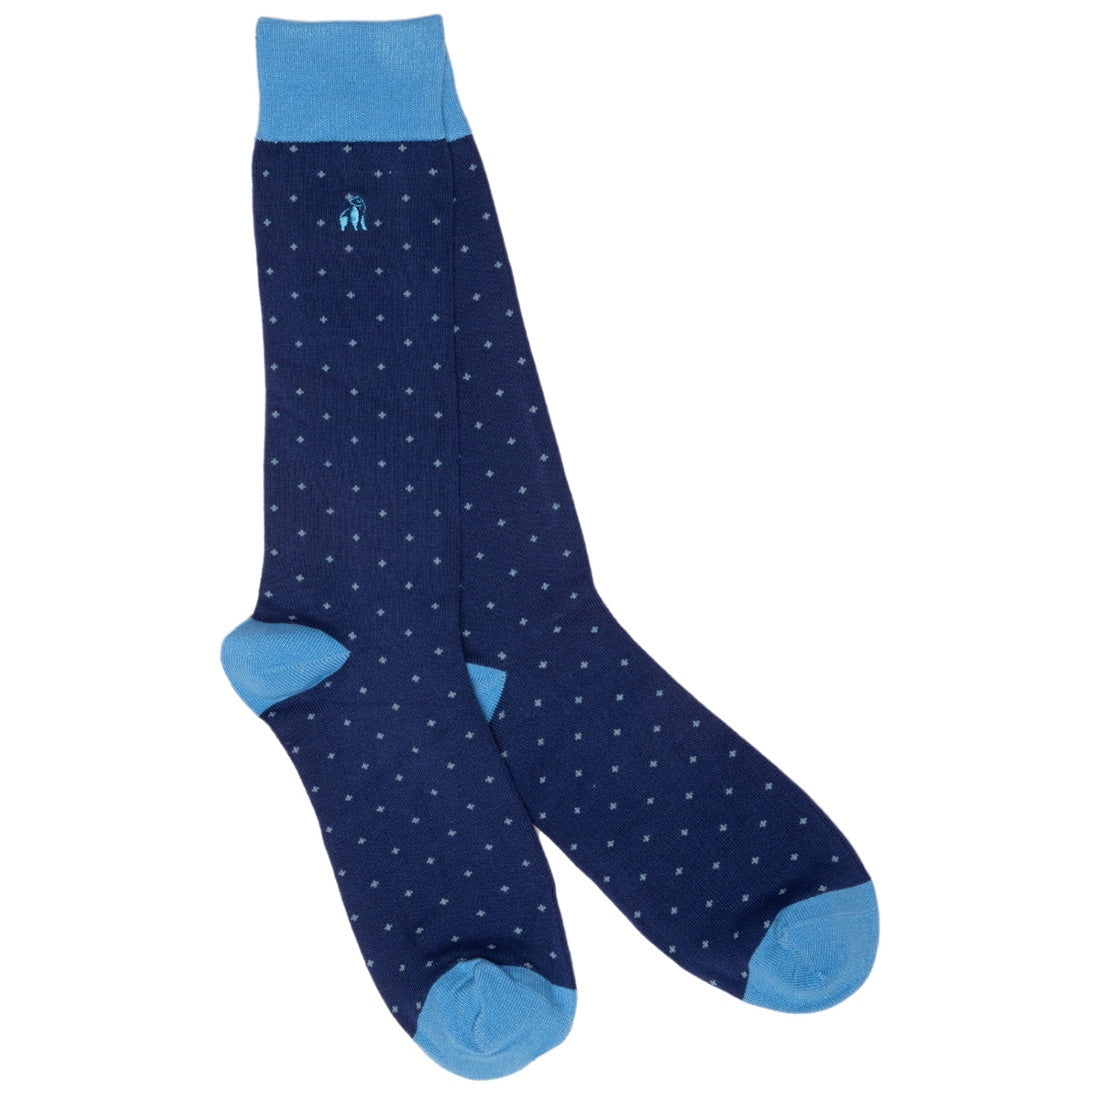 Swole Panda Socks - Blue Spotted